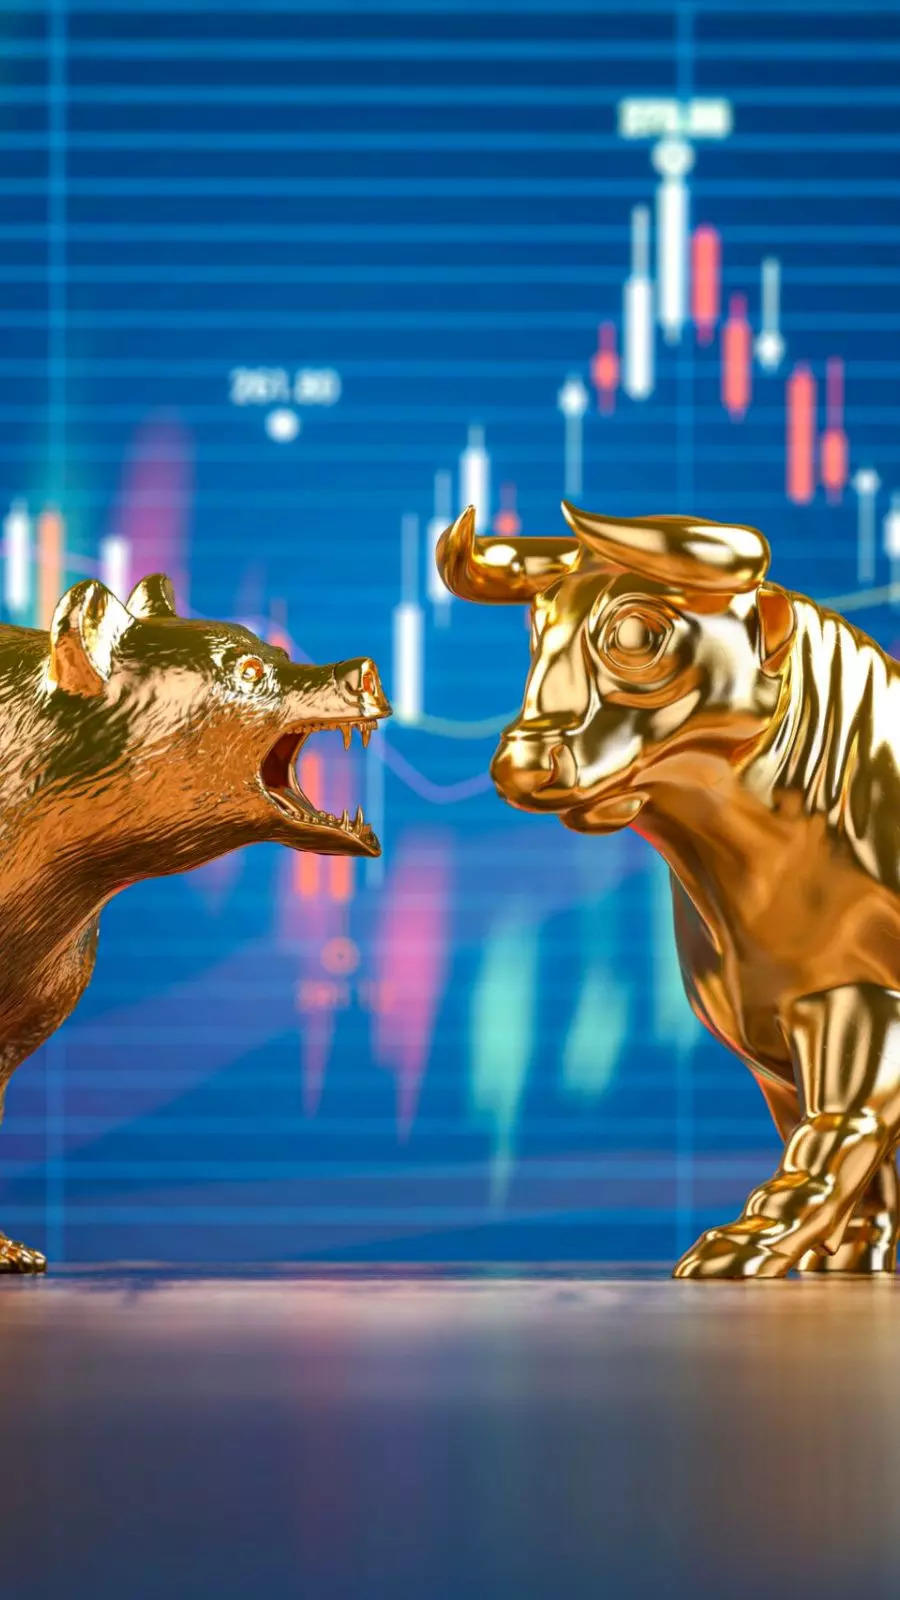 Gainers & Losers: Jio Financial, Bharti Hexacom among 8 stocks